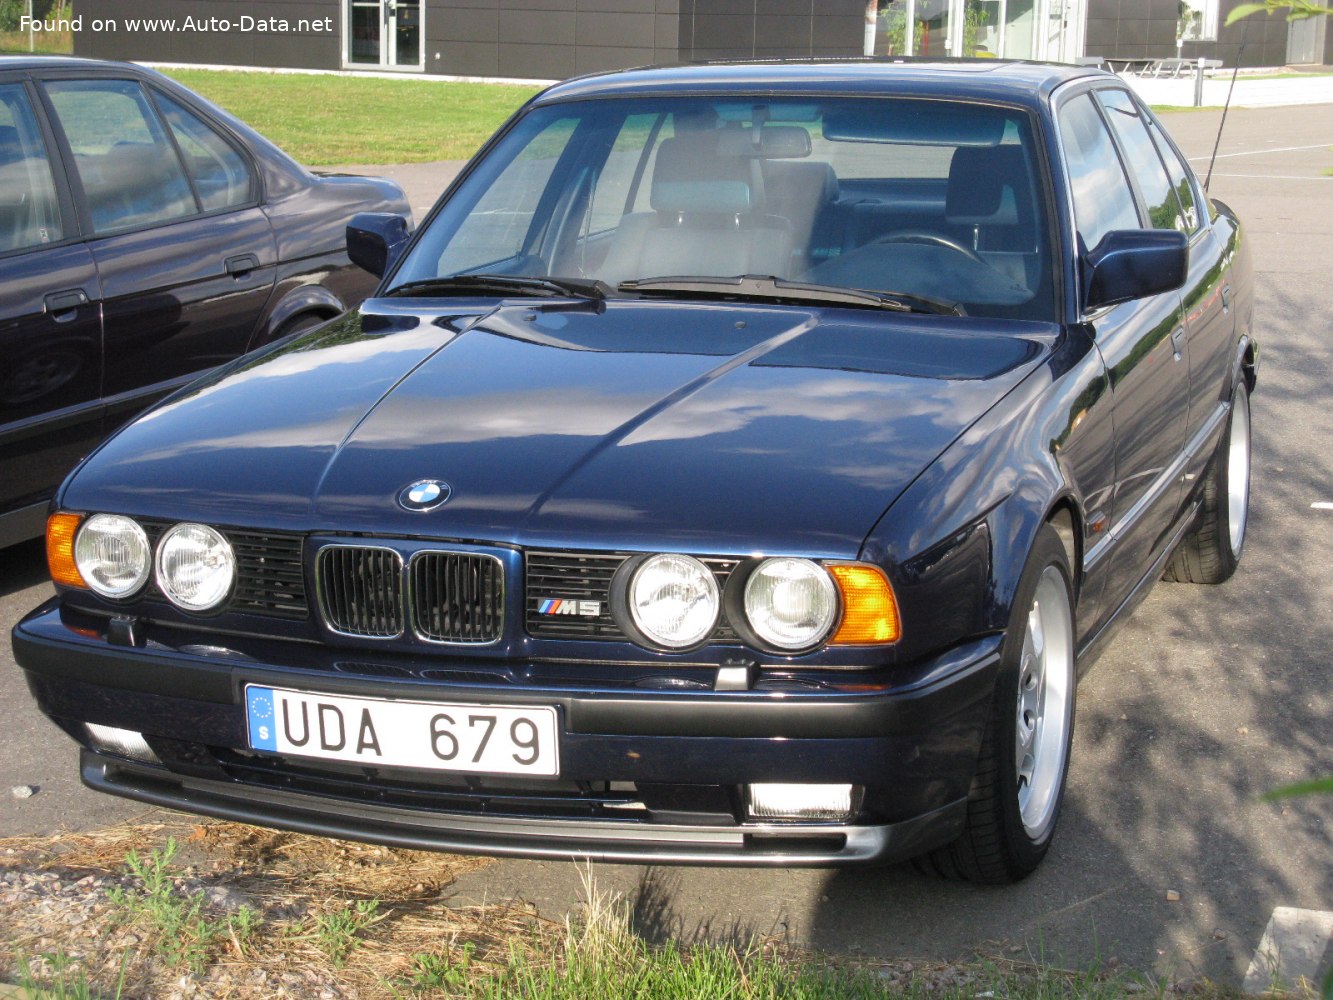 https://www.auto-data.net/images/f127/BMW-M5-E34.jpg